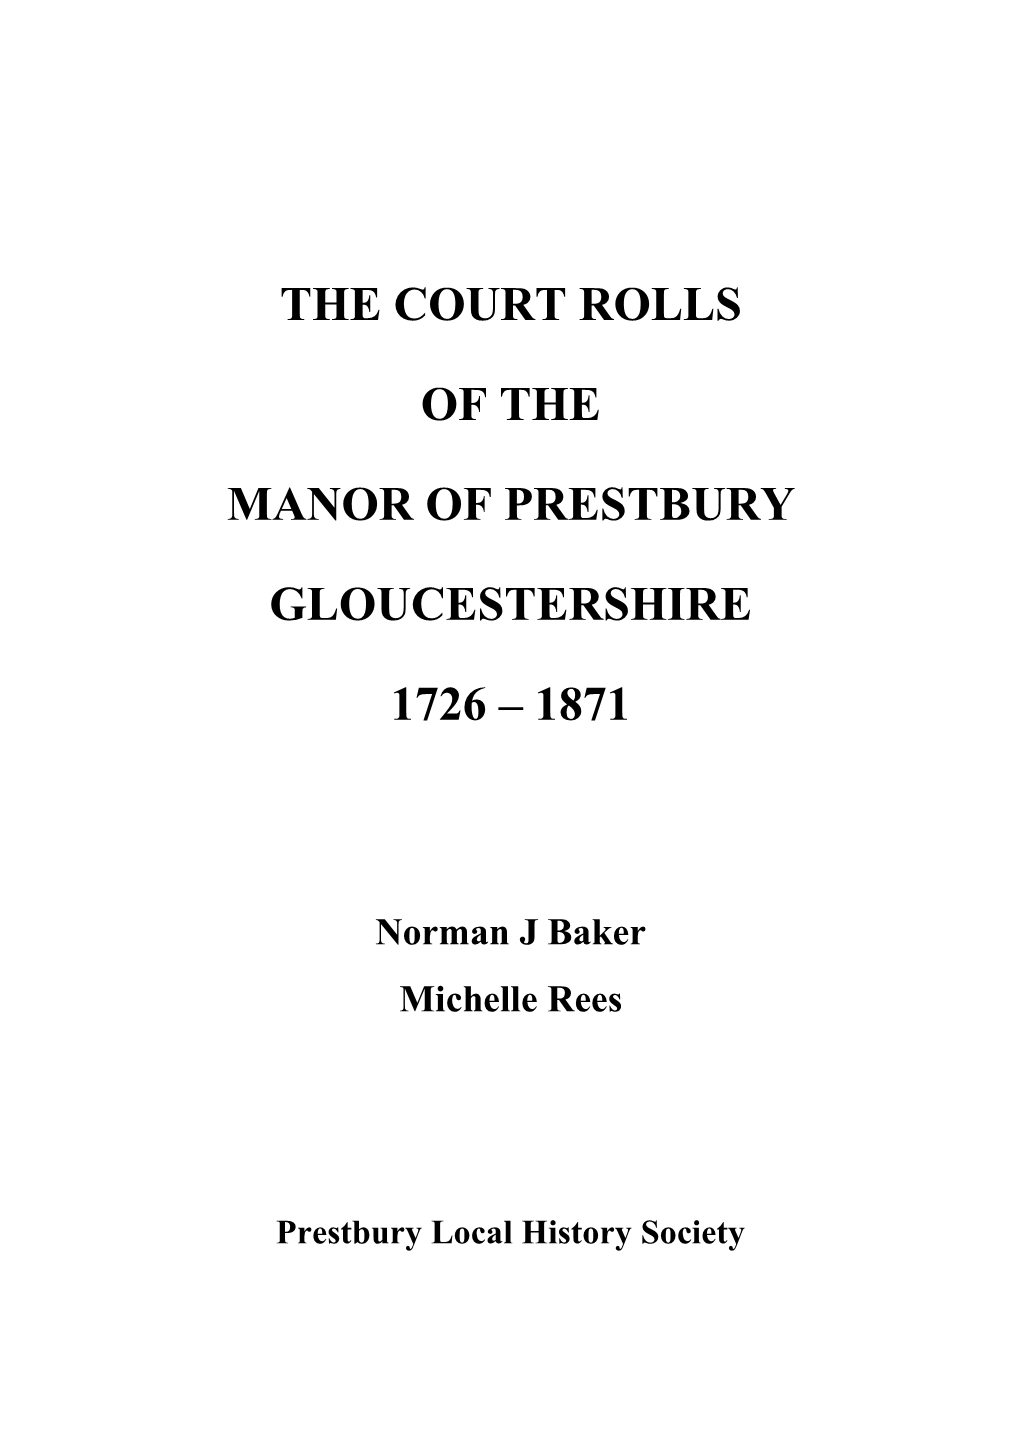 The Court Rolls of the Manor of Prestbury